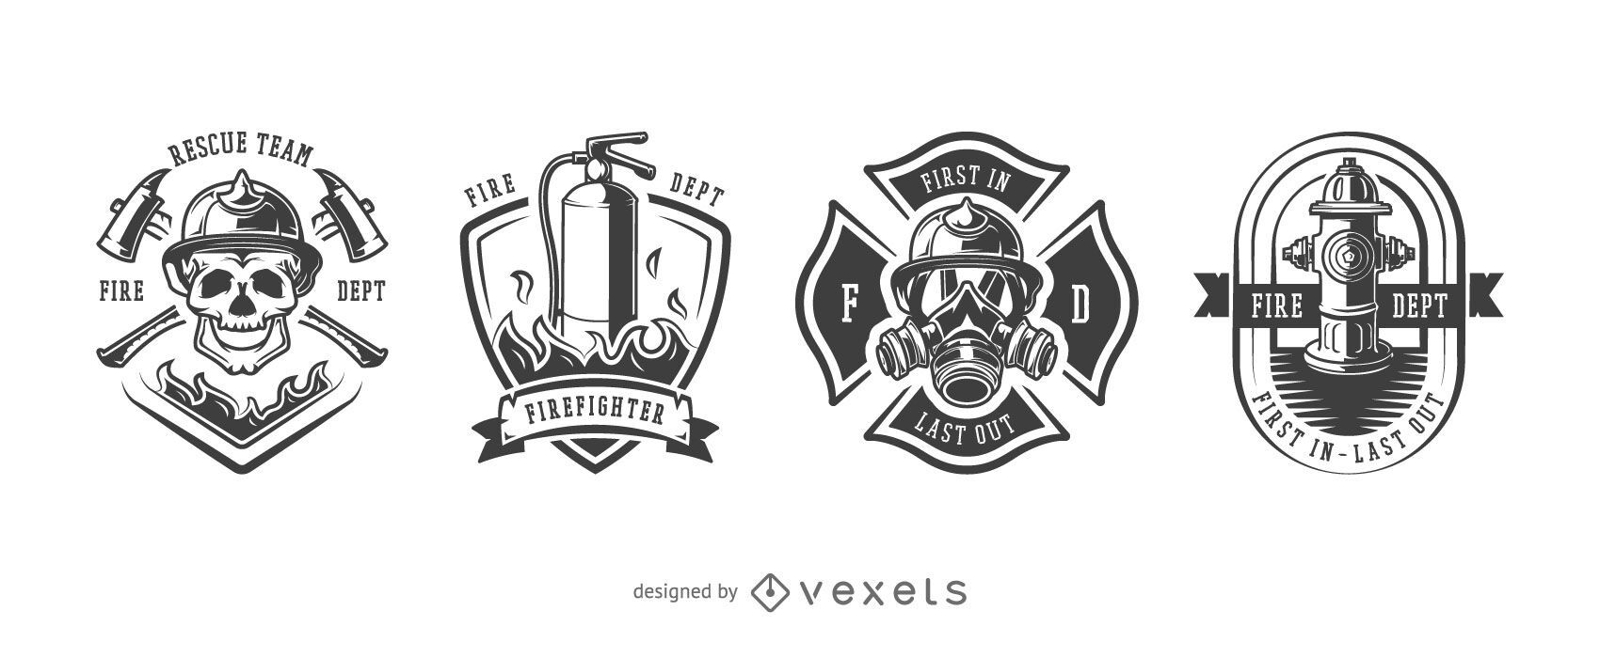 Firefighter badge set